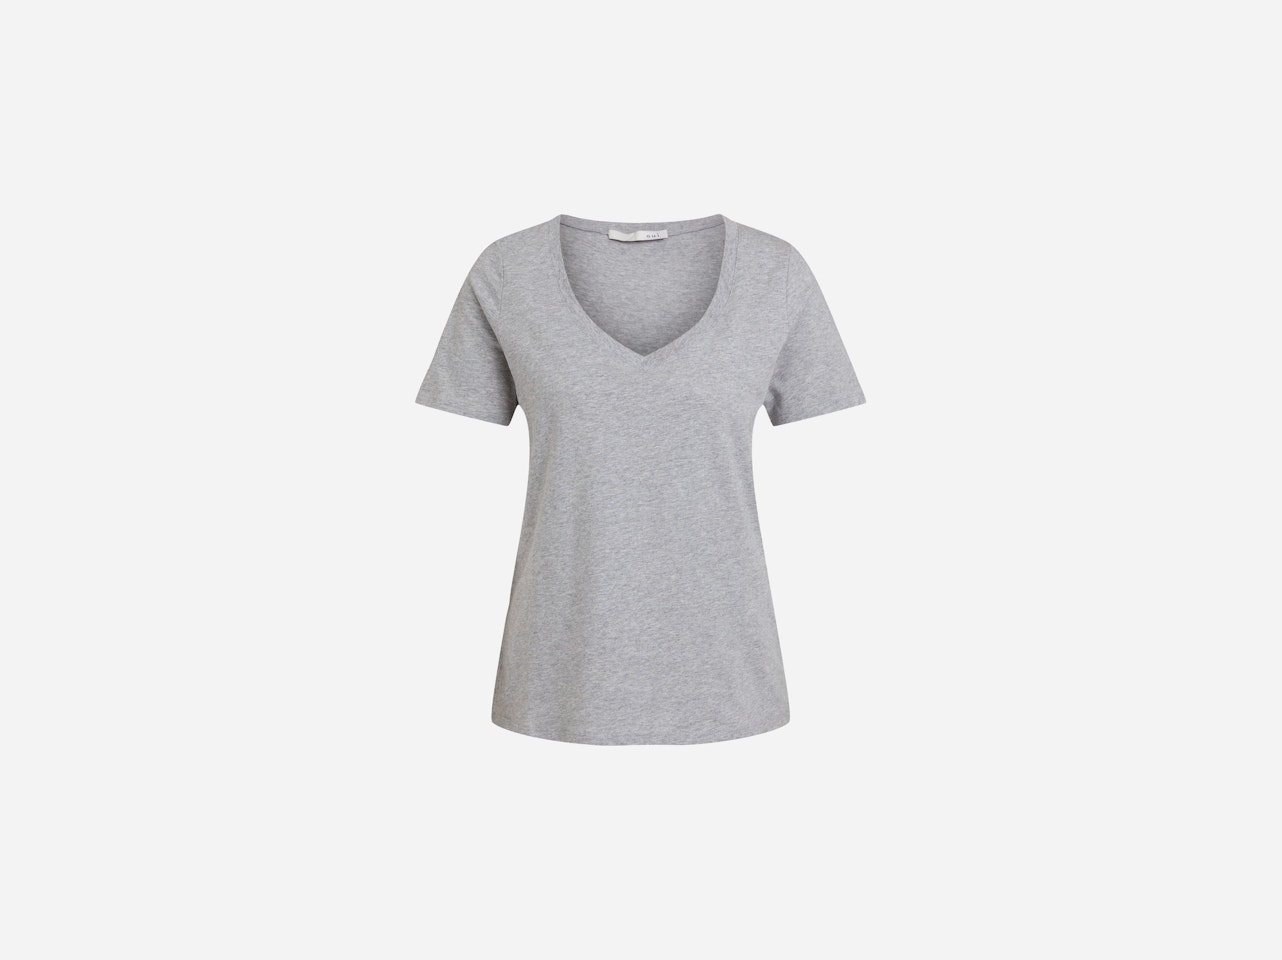 Bild 9 von CARLI T-shirt 100% organic cotton in light grey | Oui